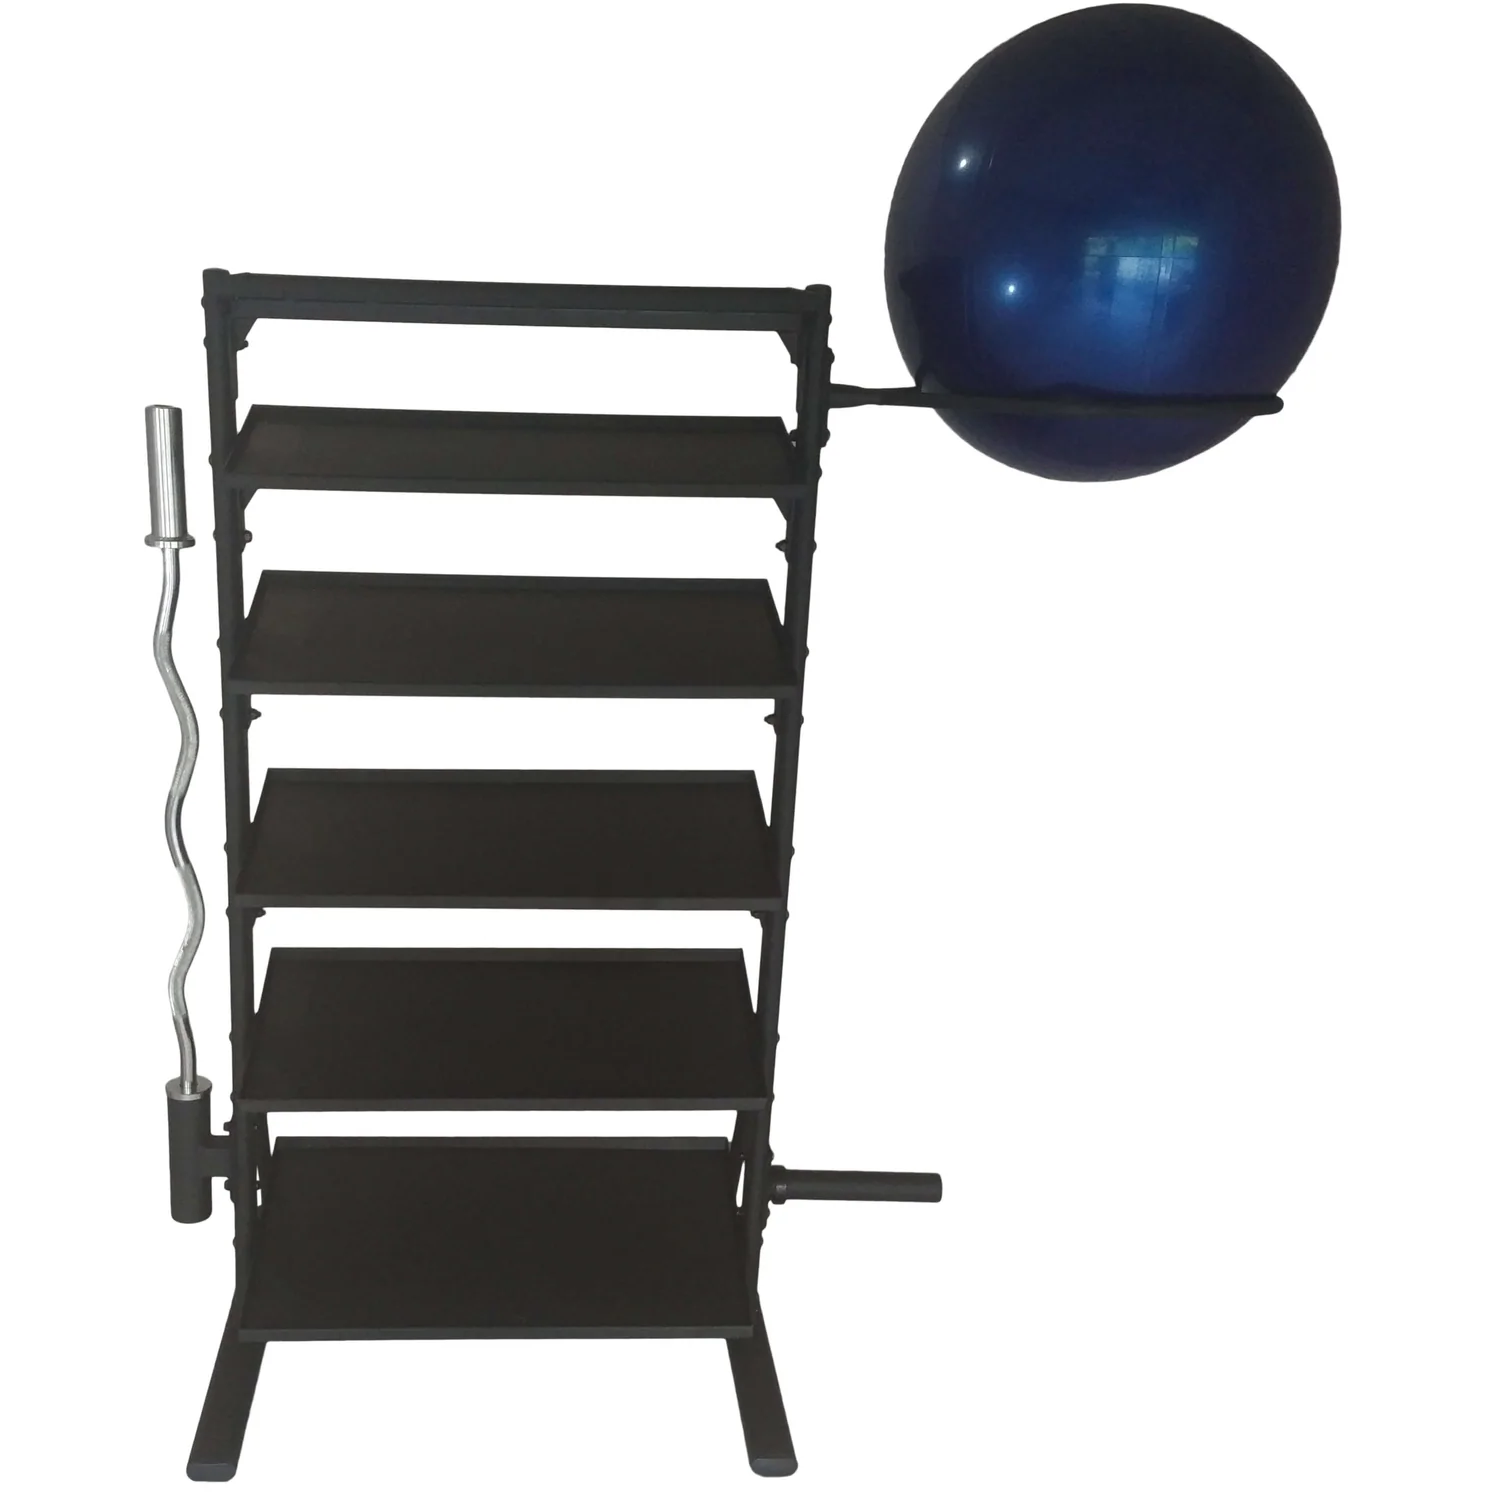 Motive Fitness Stability Ball Storage